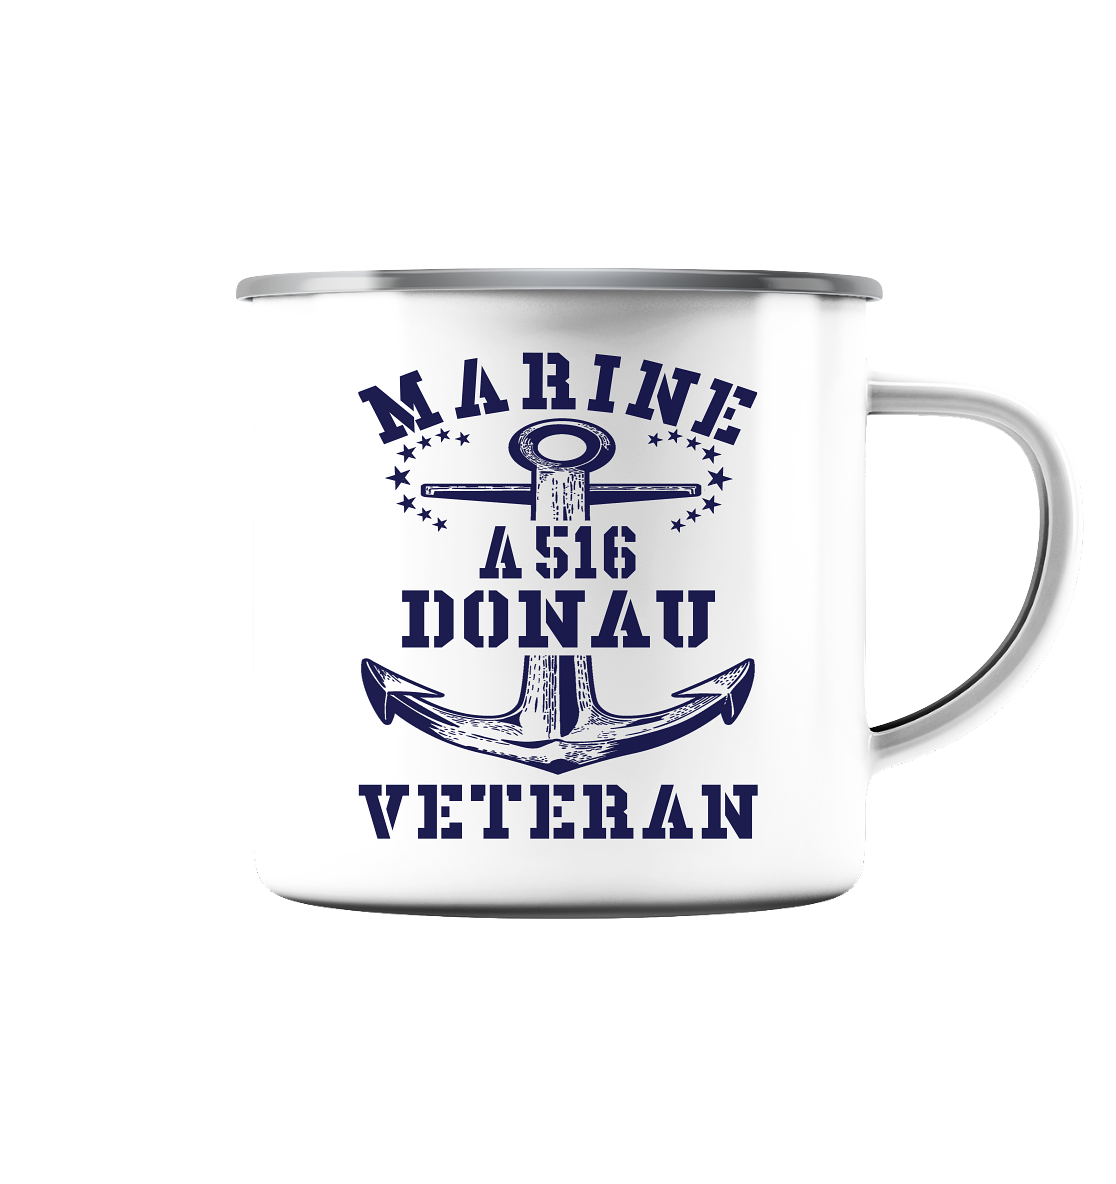 Tender A516 DONAU Marine Veteran  - Emaille Tasse (Silber)